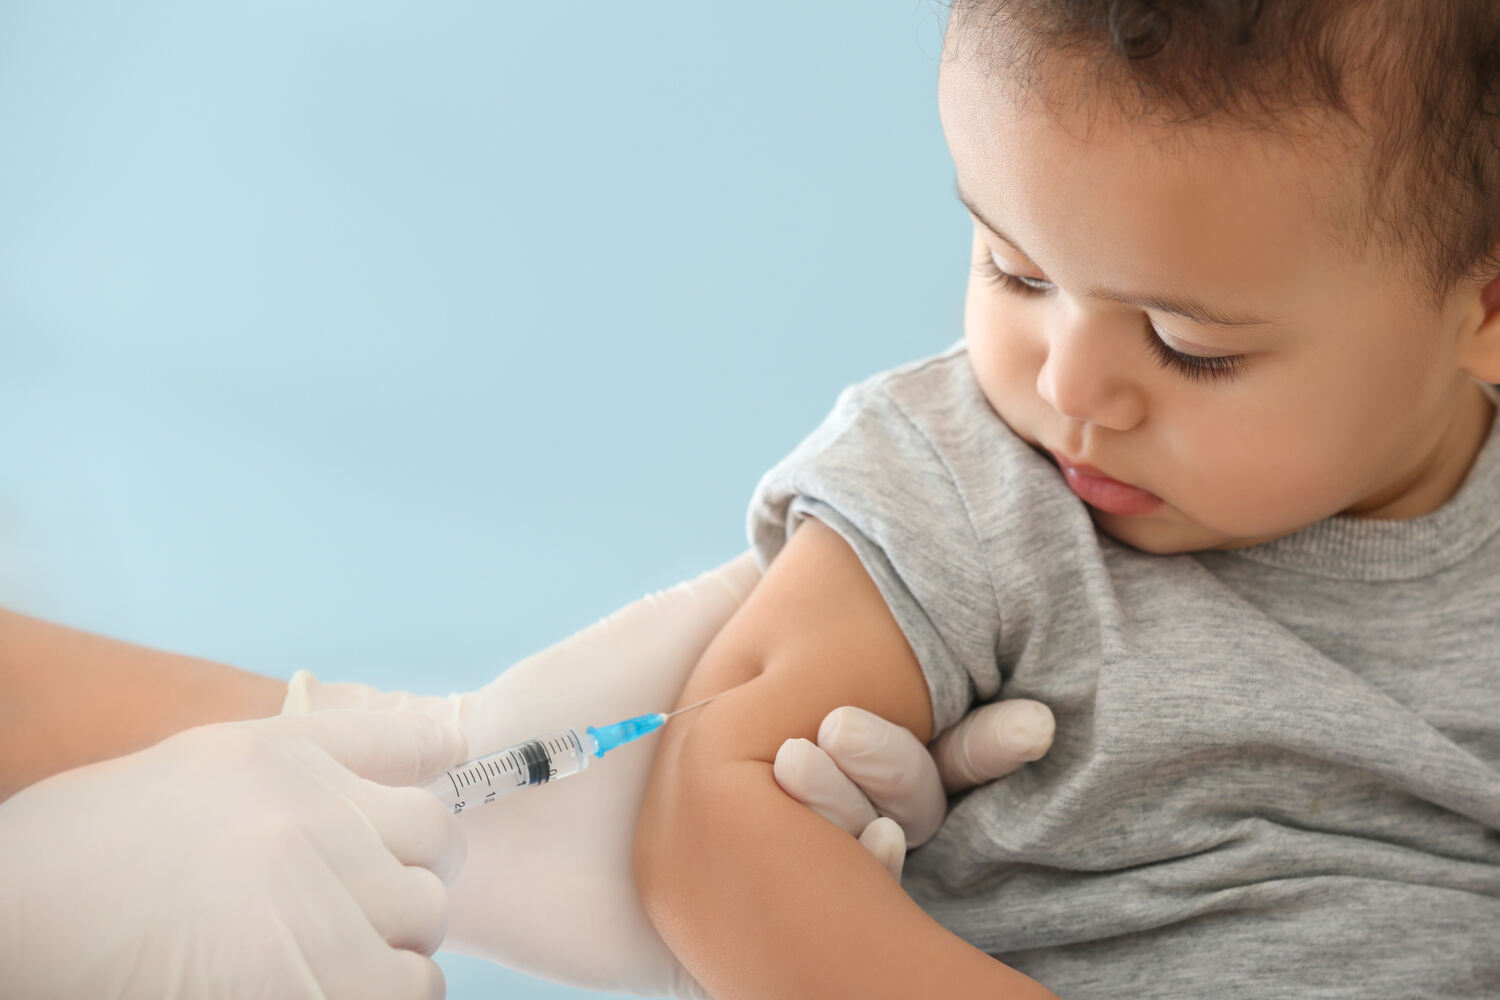 Timely immunizations help